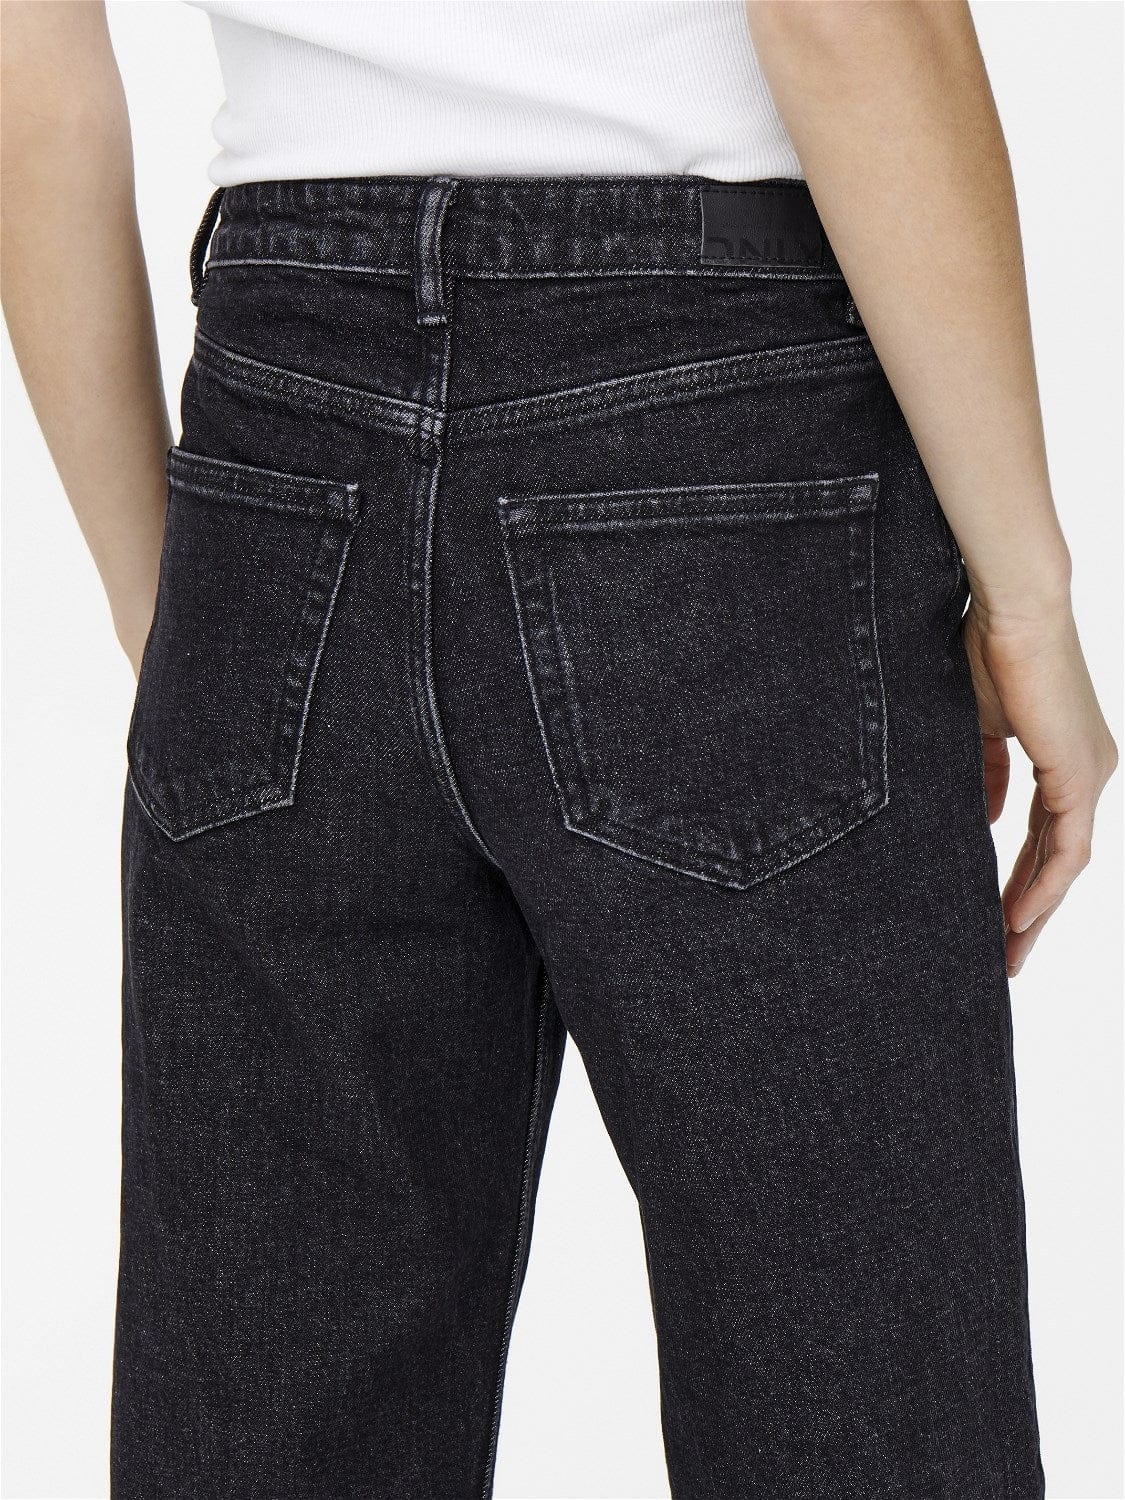 Only Underdele Black Denim Wide Jeans - Juicy Only